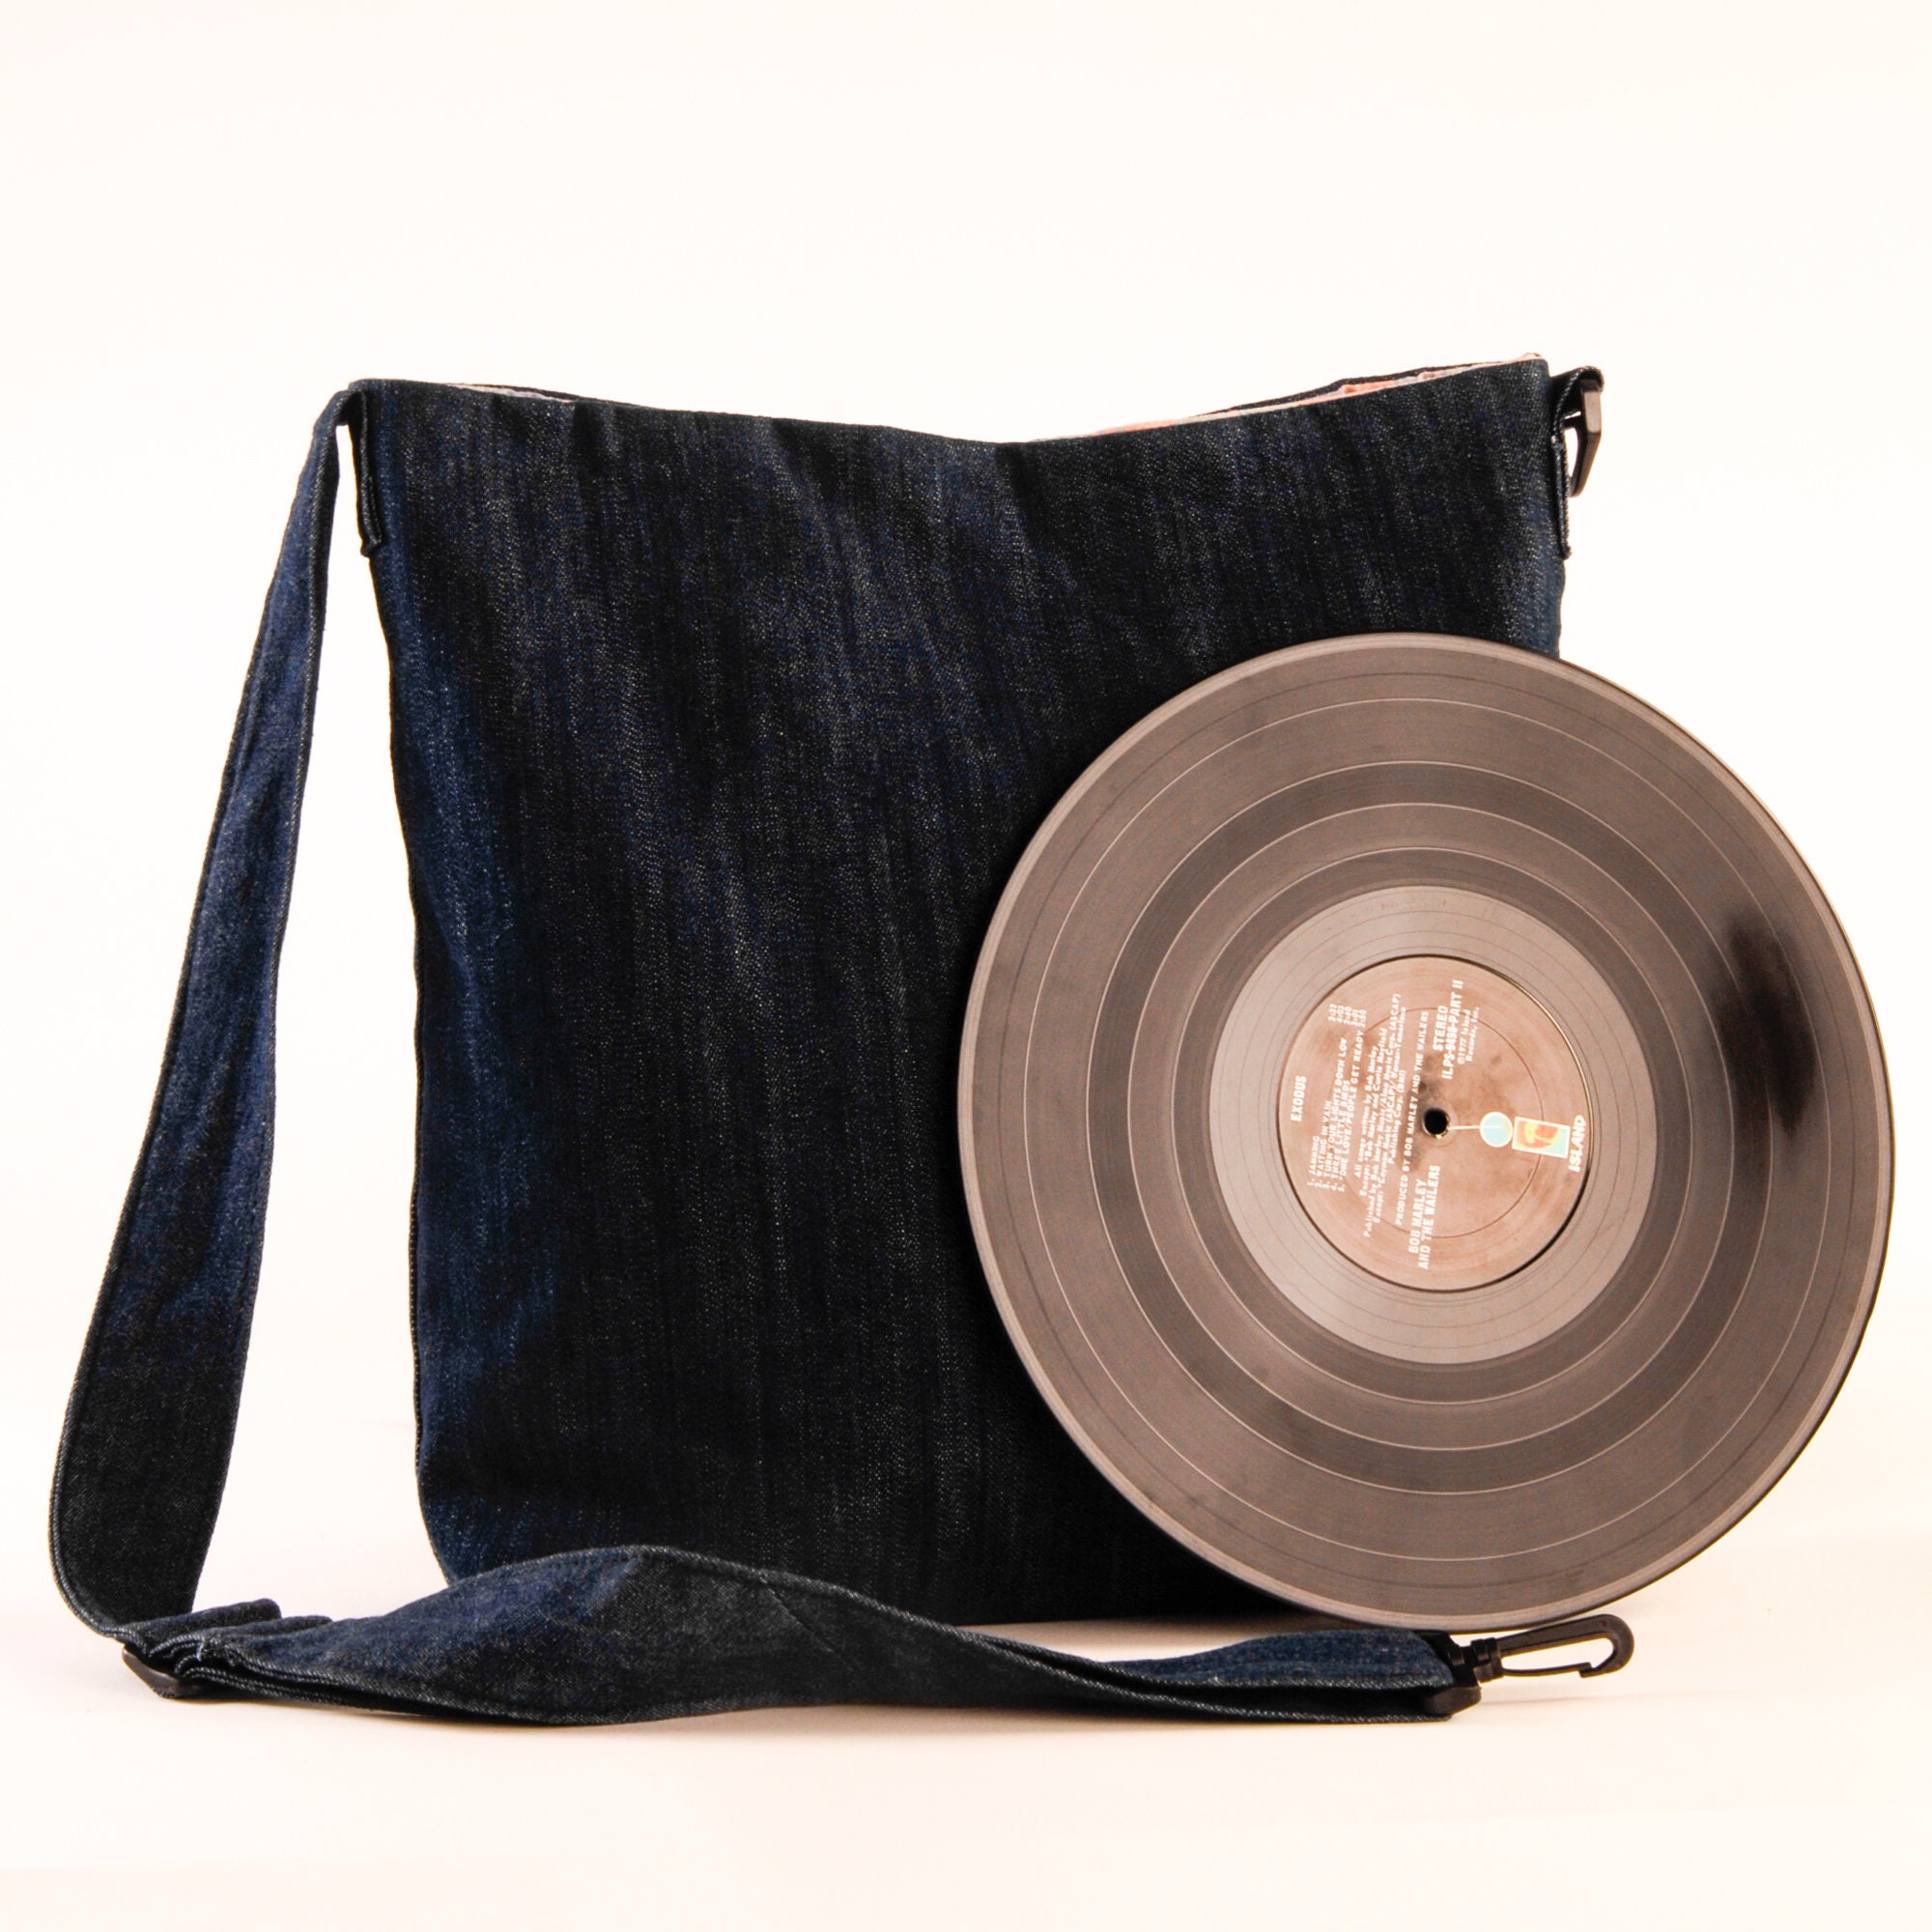 Custom Partridge Family Vinyl Record Purse LP Handbag Handmade 